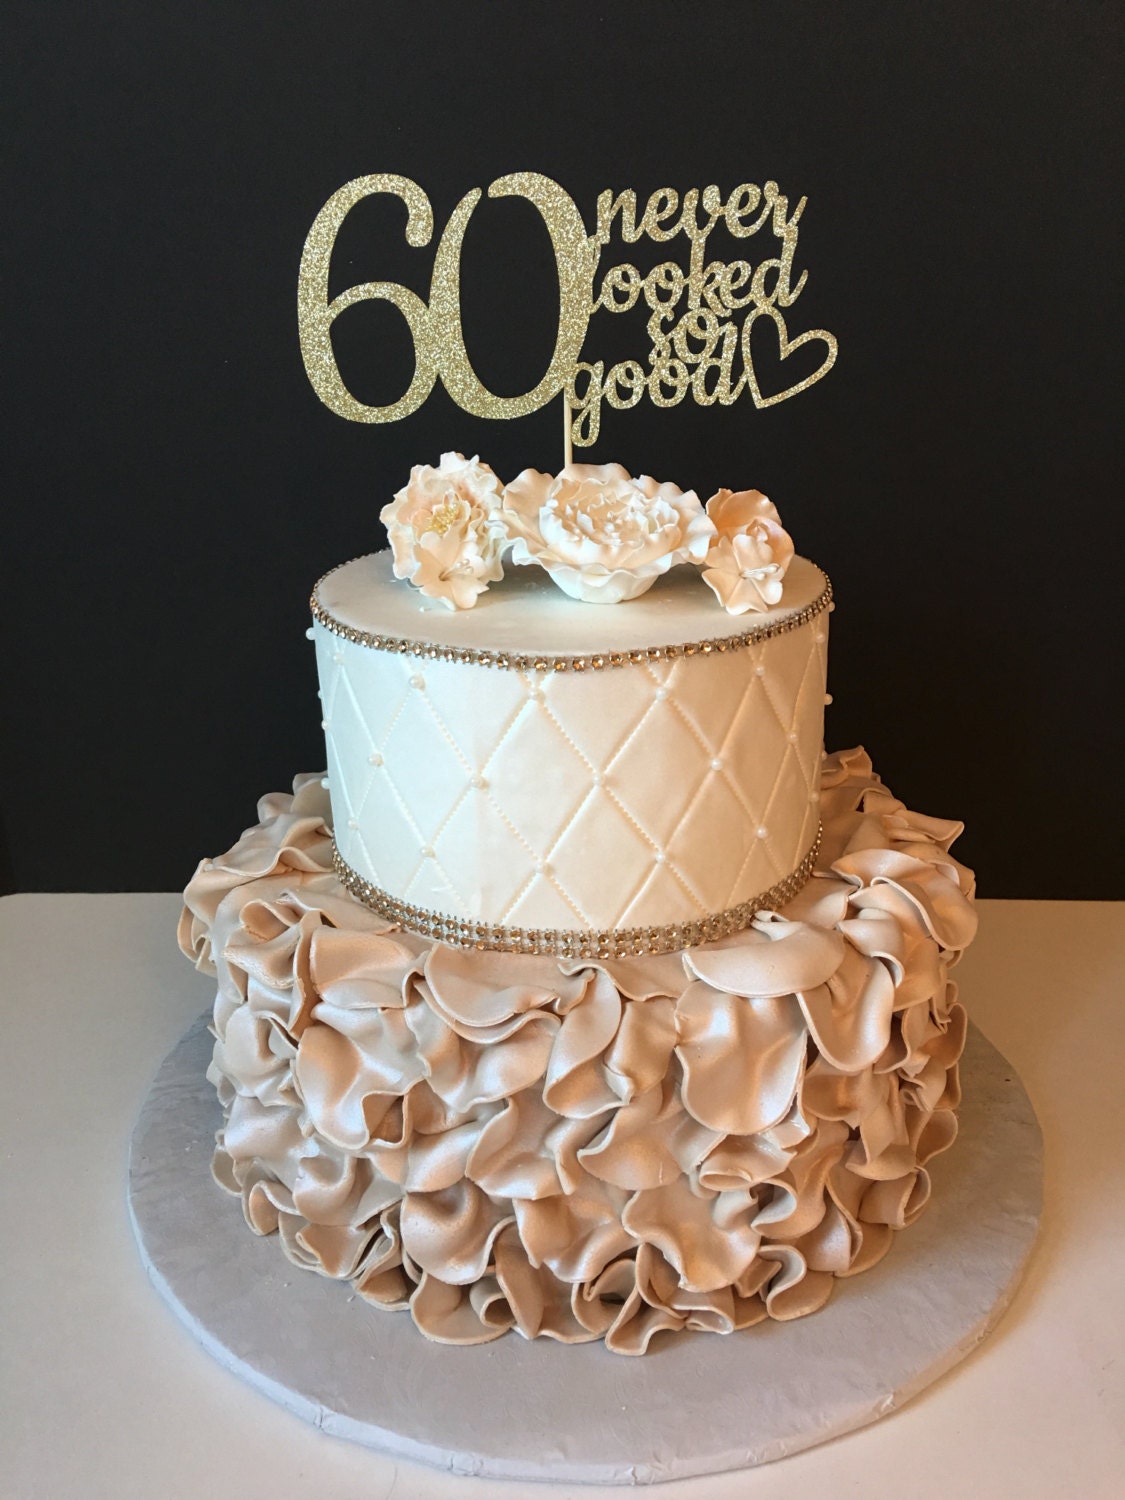 Gorgeous 60Th Birthday Cake Decorations : Cake Decorations